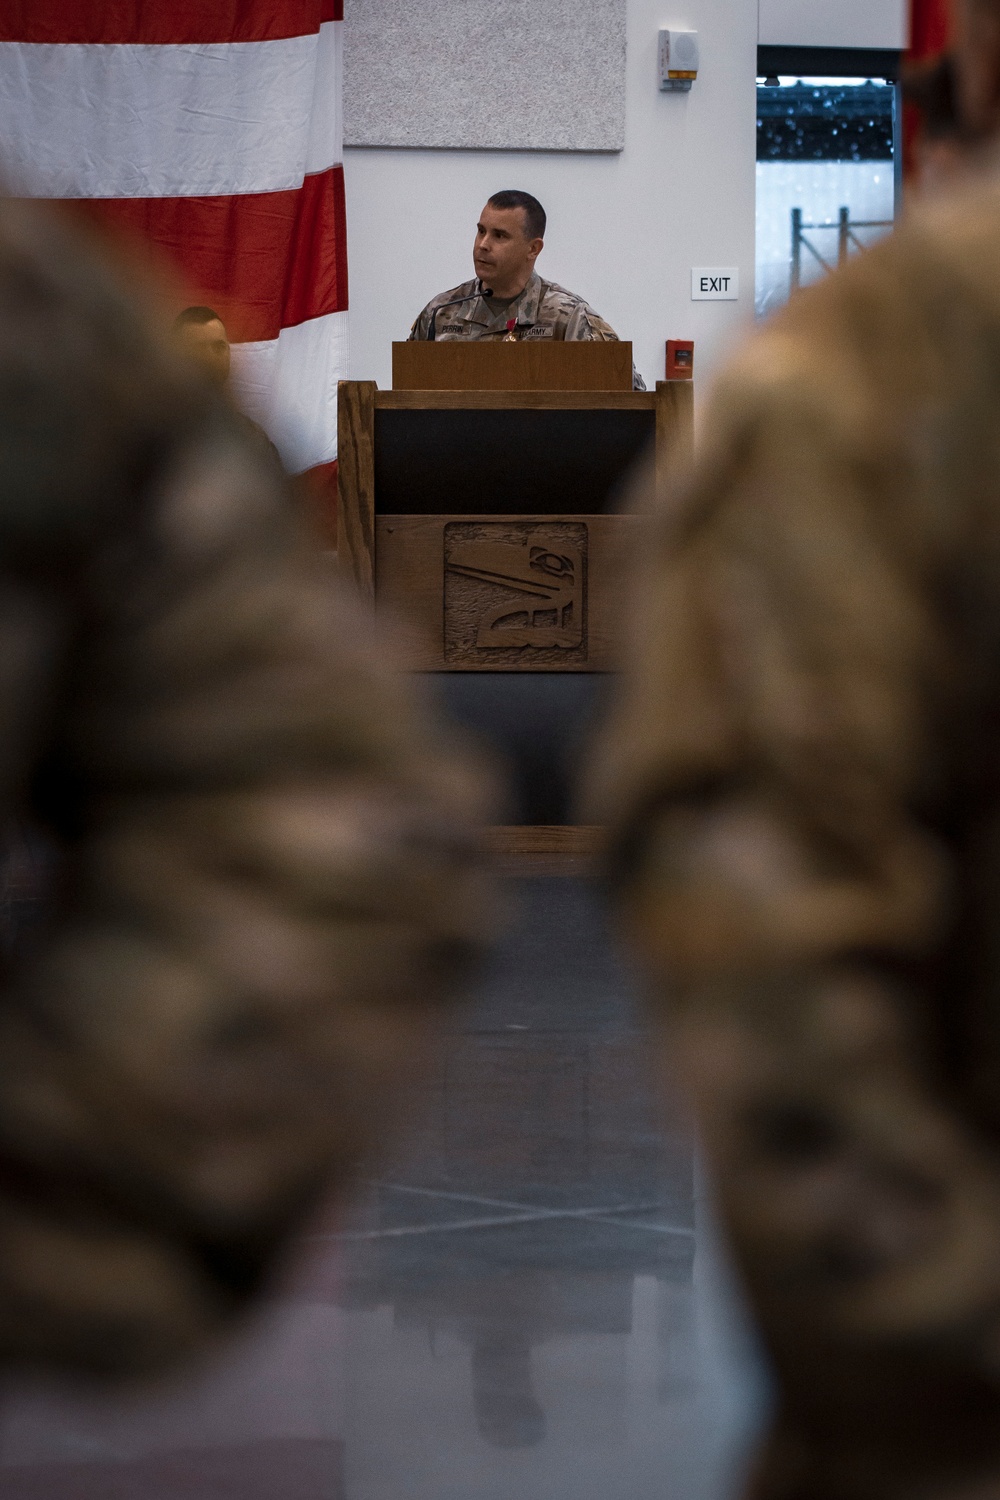 81st Stryker Brigade Combat Team change of command ceremony